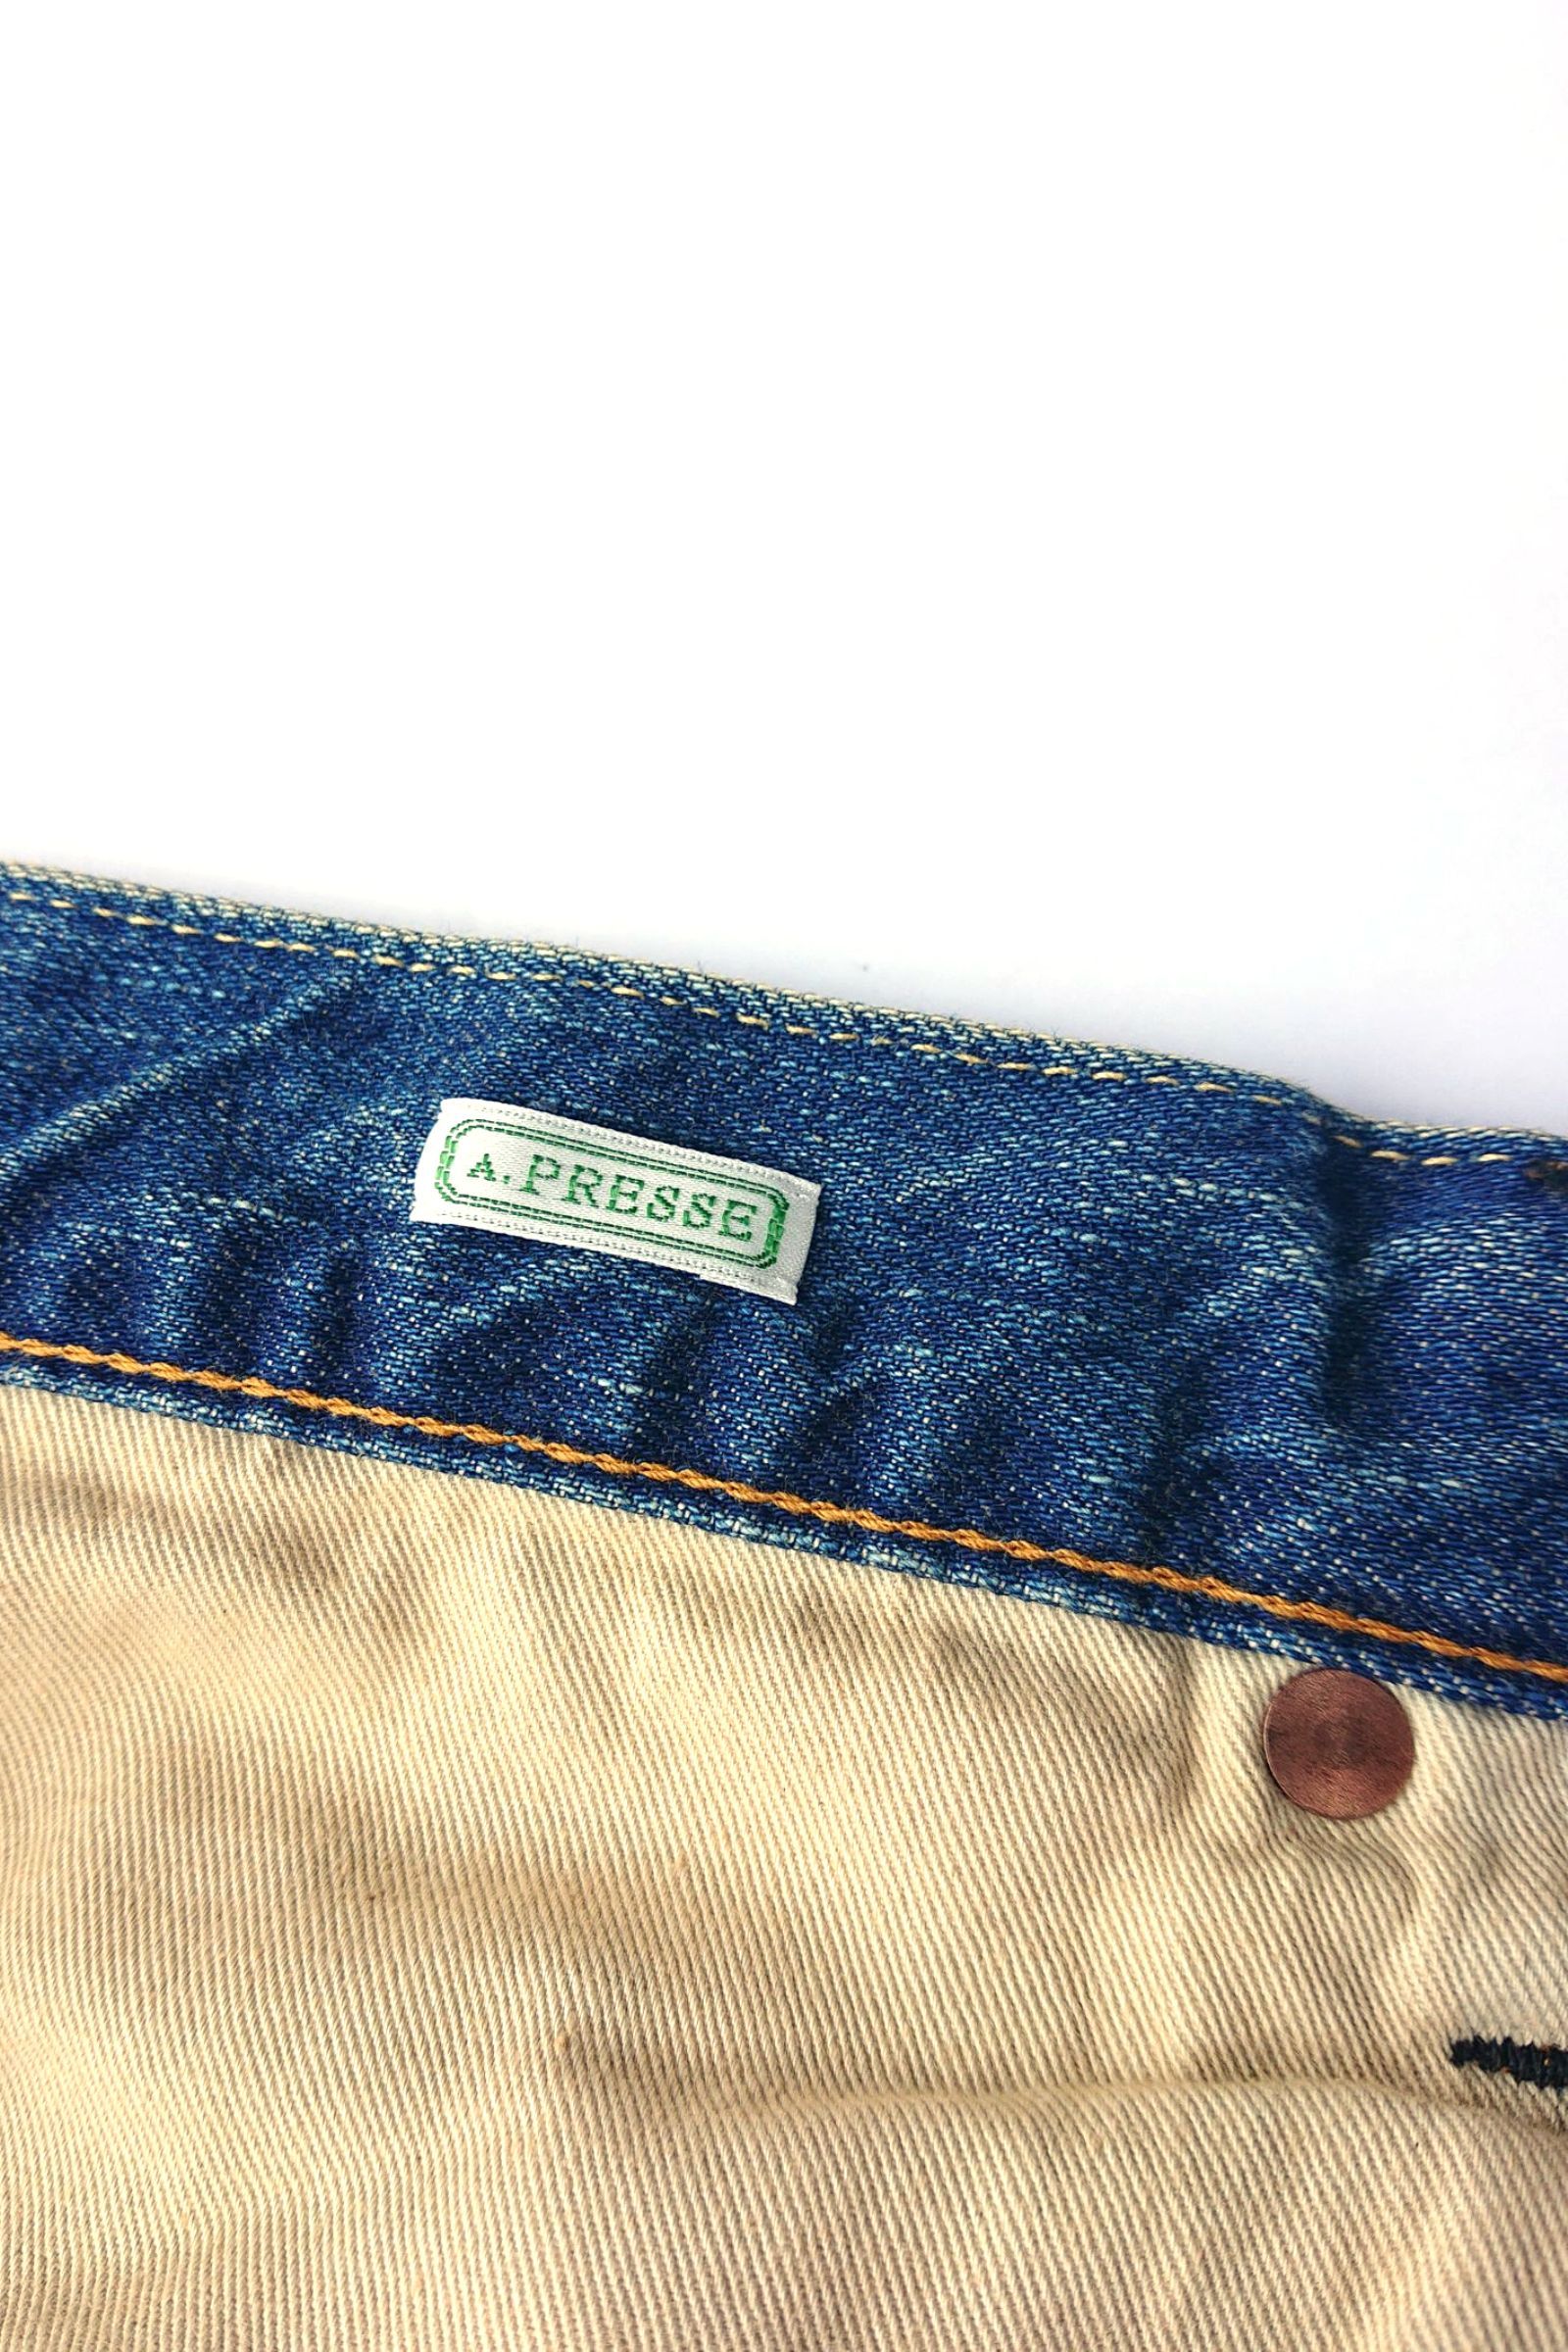 A.PRESSE - washed denim wide pants 22ss 12月11日発売! | asterisk